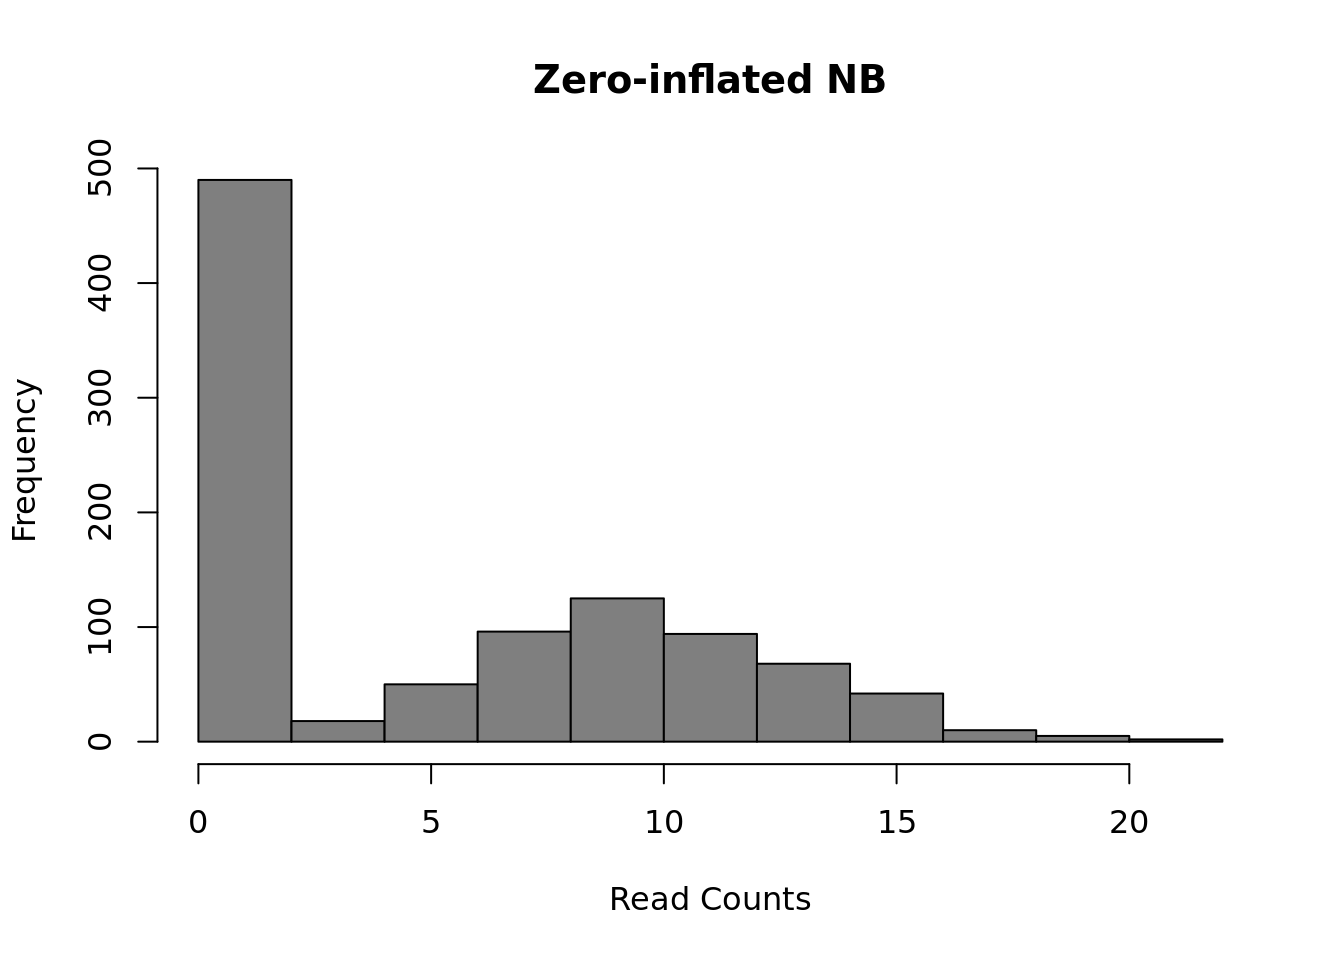 Zero-inflated Negative Binomial distribution